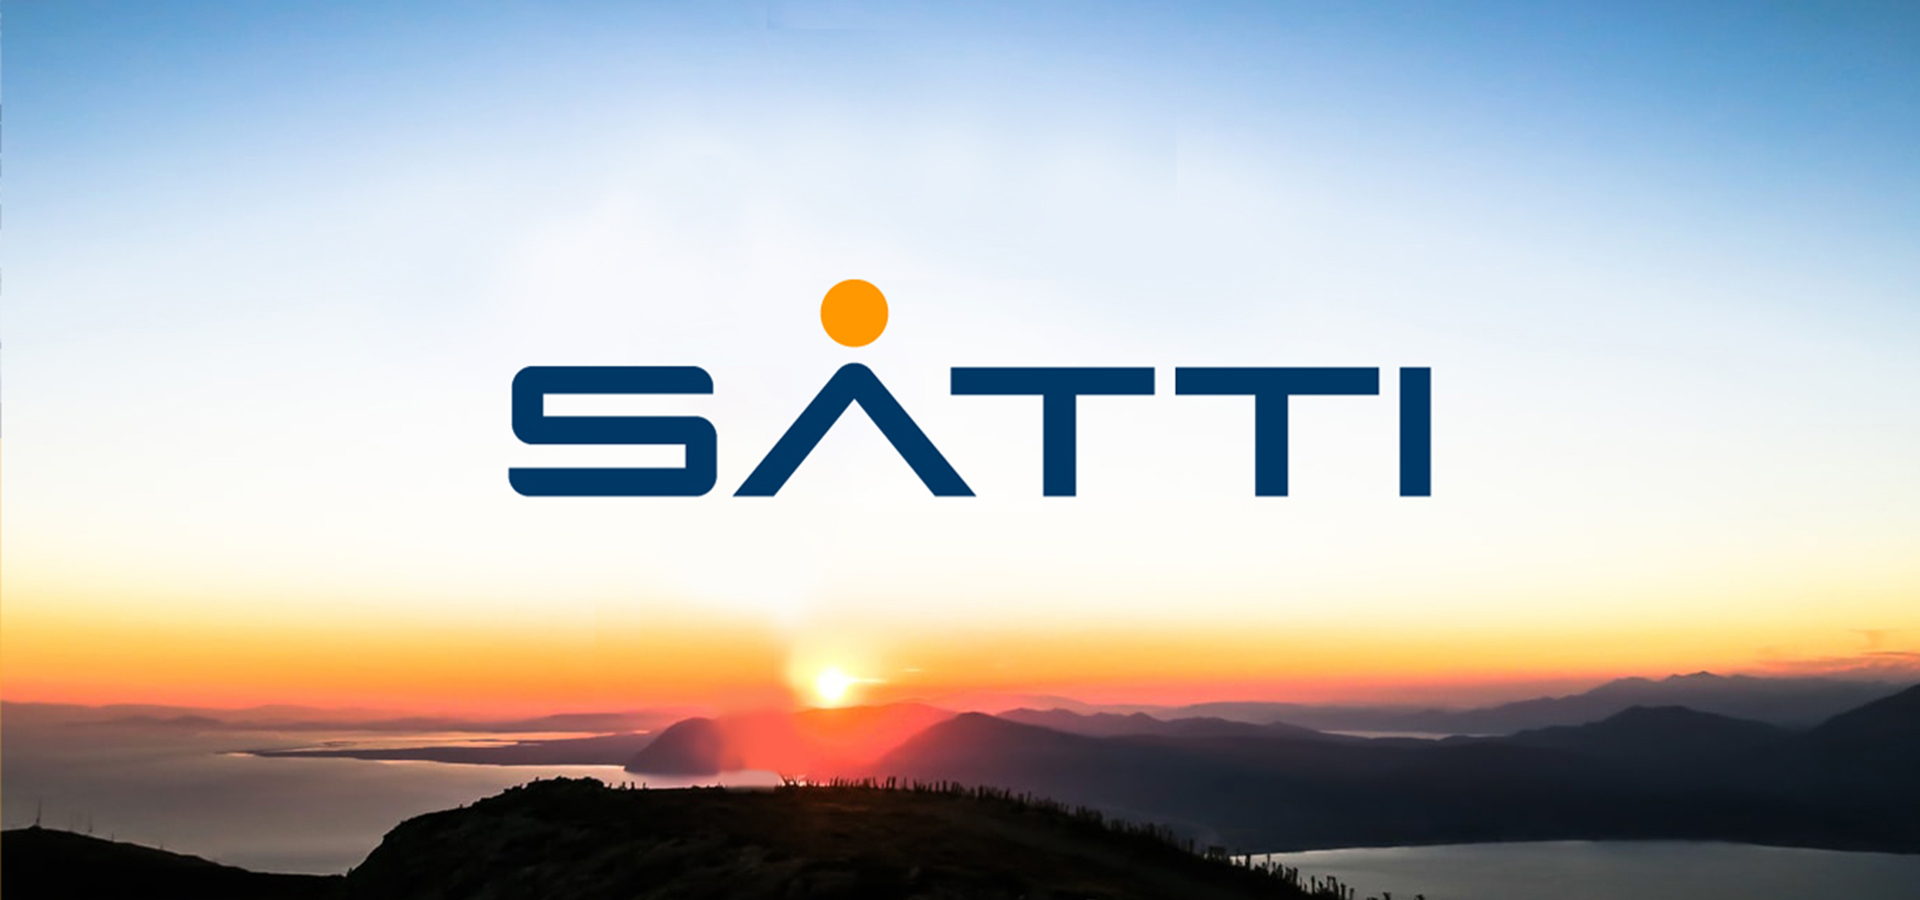 SATTI small banner | 超尊科技品牌再造專案 | Labsology 法博思品牌顧問公司